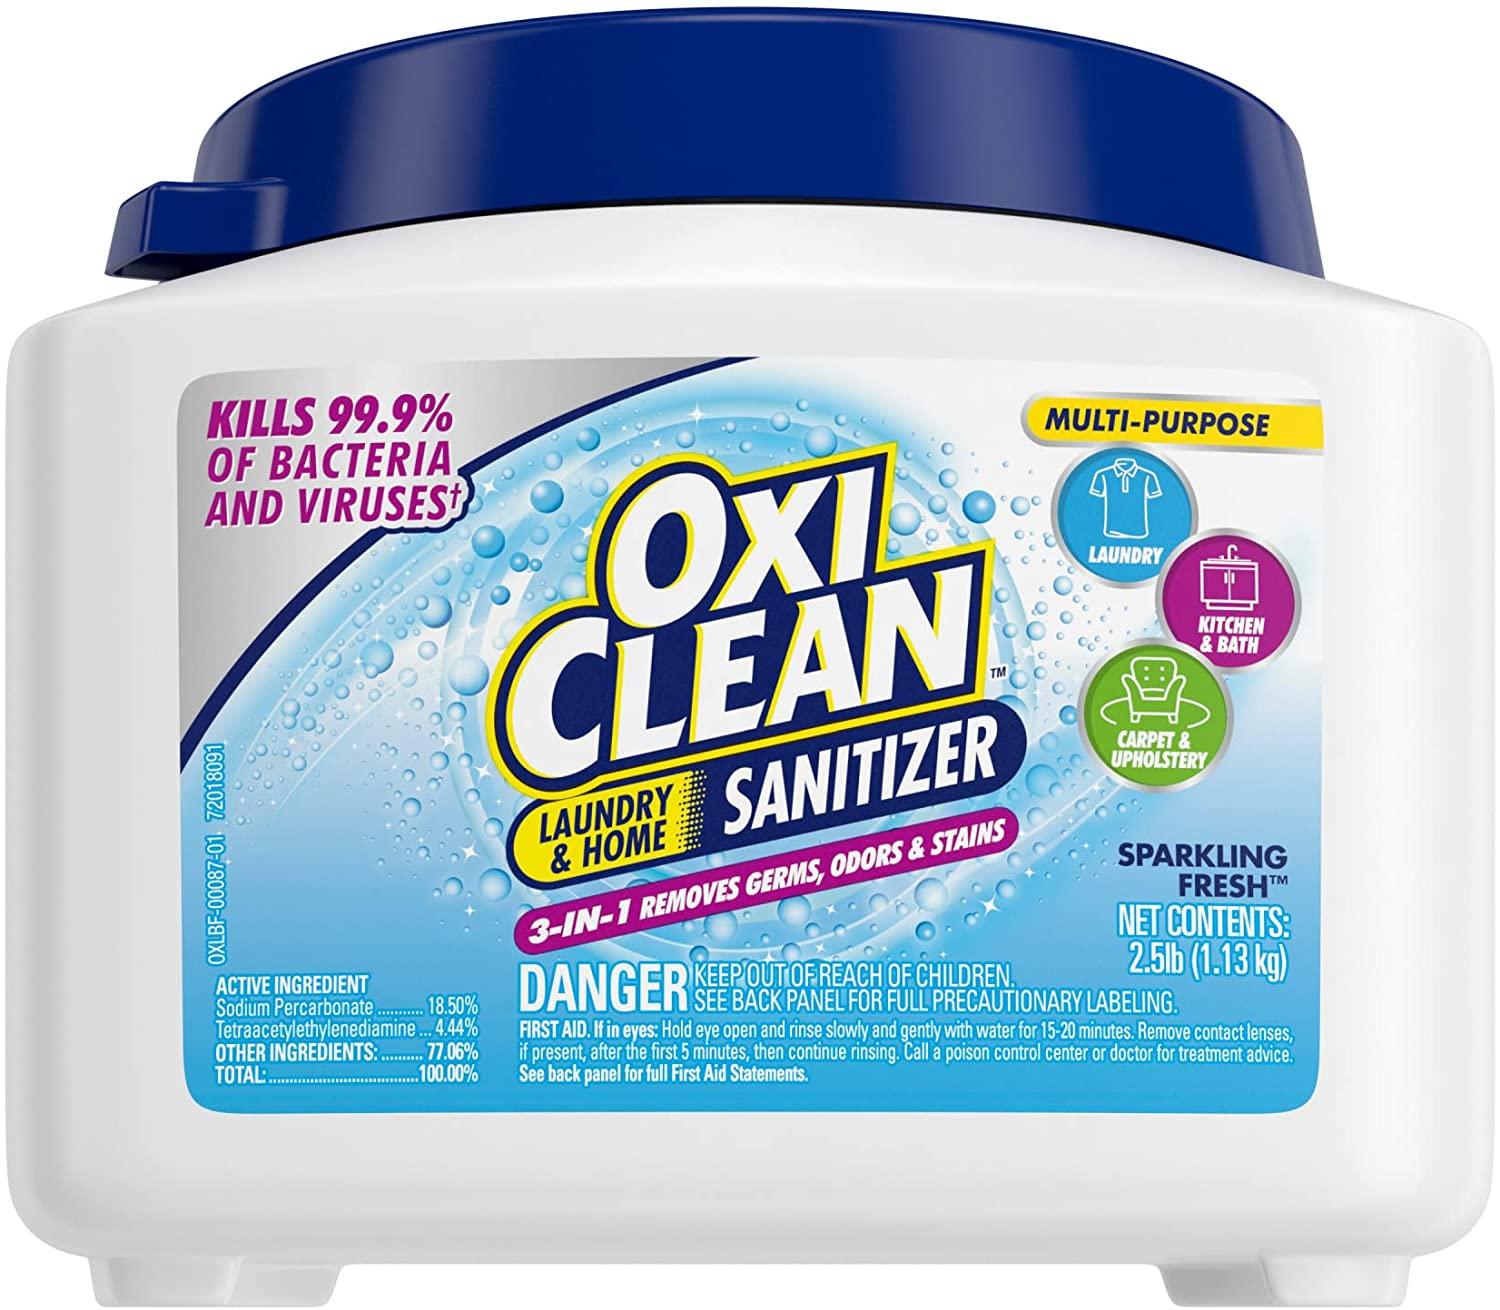 2.5lb OxiClean Powder Sanitizer for $5.59 Shipped